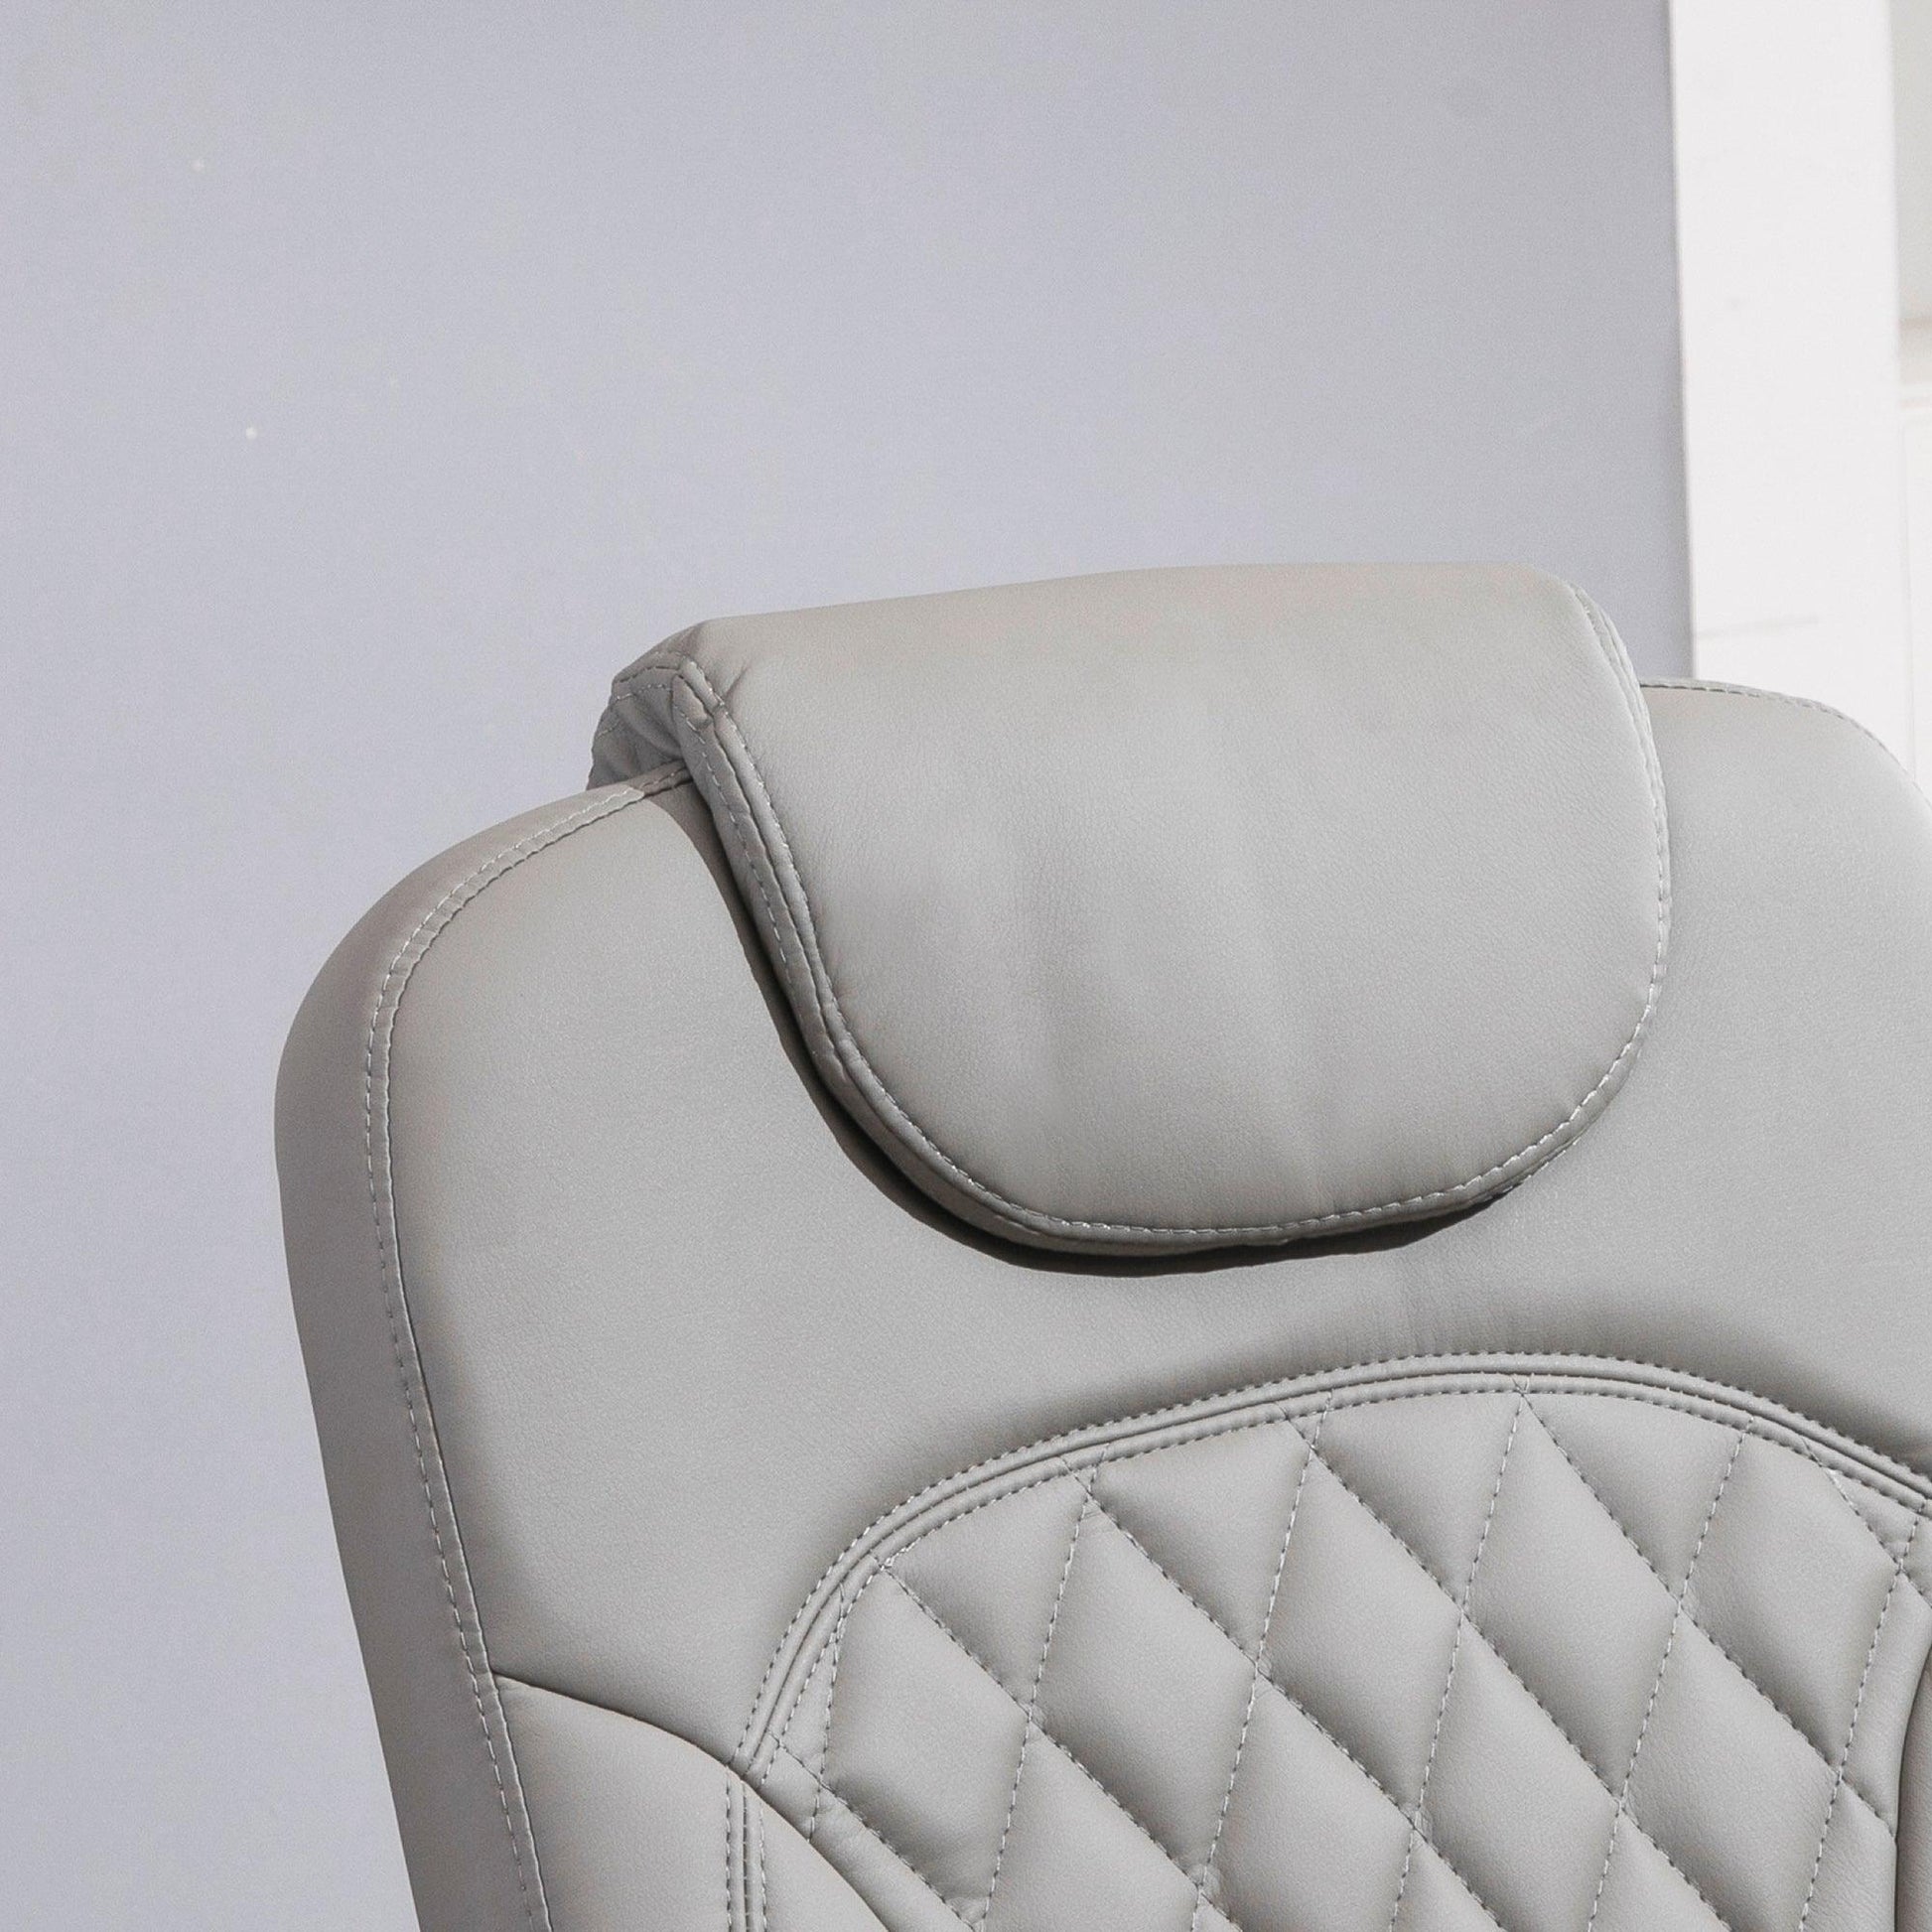 HOMCOM Grey Recliner Chair with Footrest - Ultimate Comfort - ALL4U RETAILER LTD